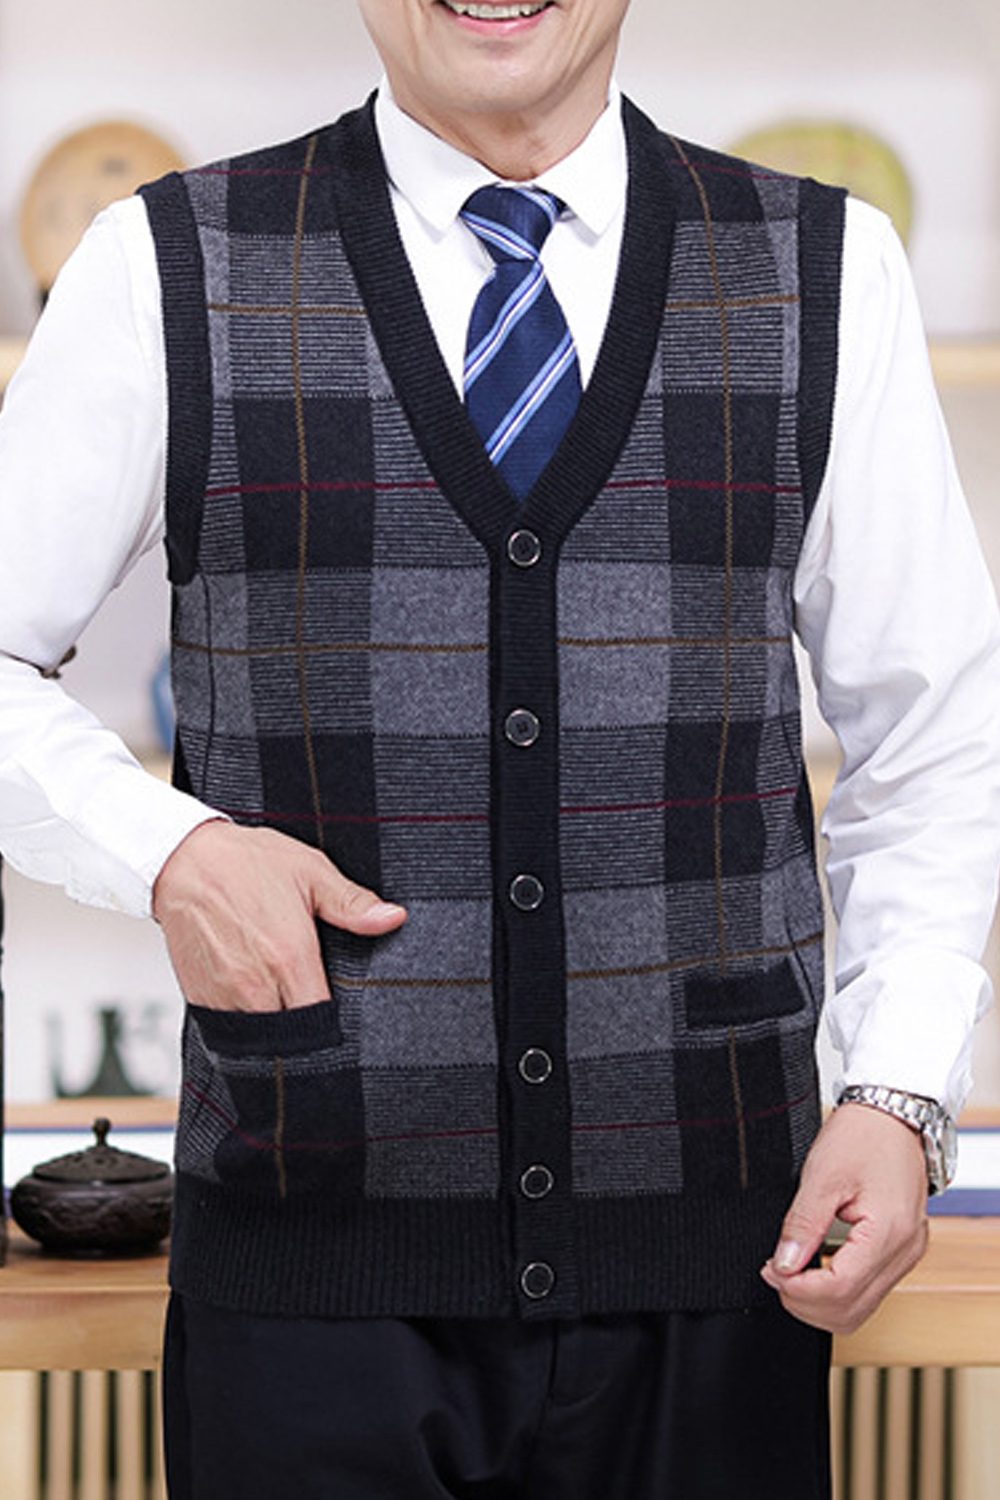 Mens Full-sleeve Knitted Classic Style argyle Jumper Waistcoat Cardigans V Neck